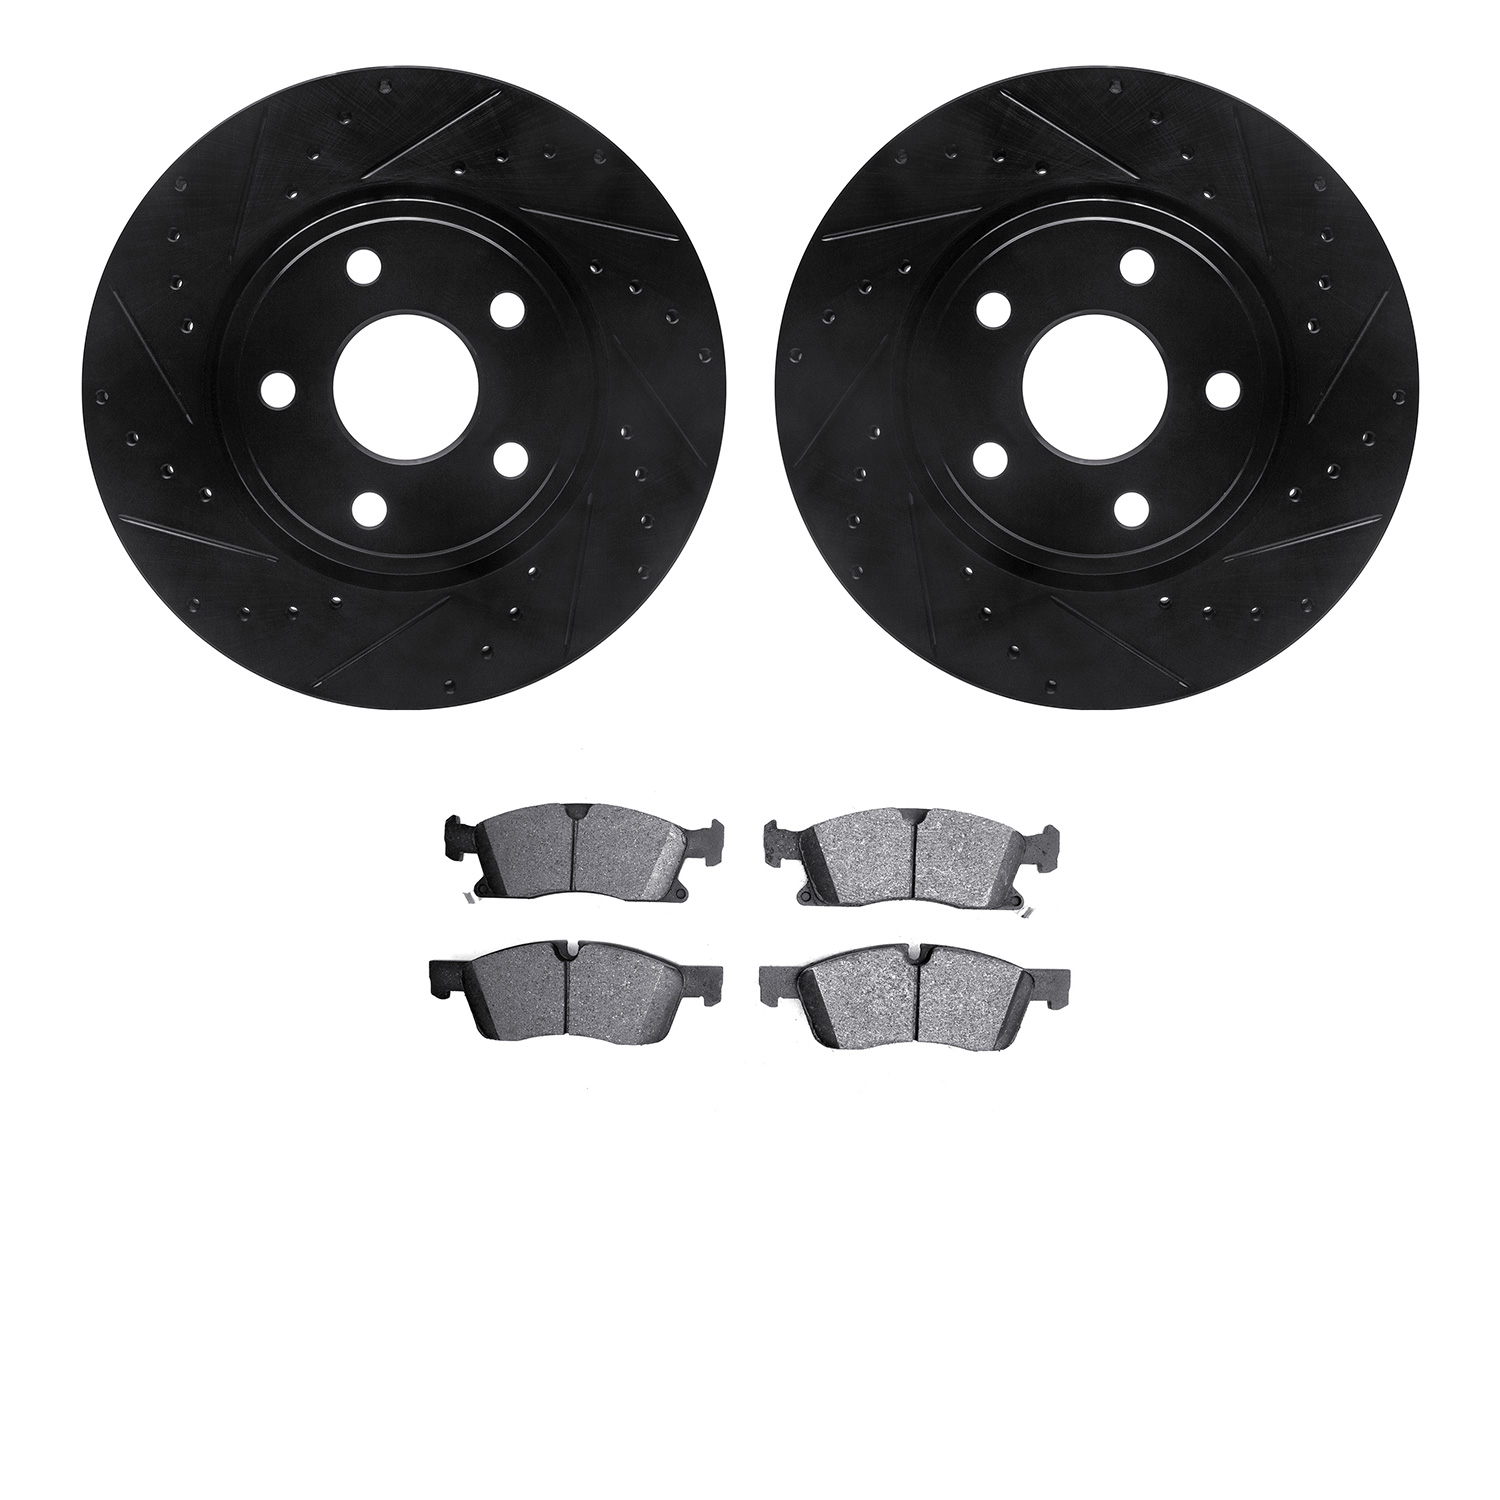 8302-42050 Drilled/Slotted Brake Rotors with 3000-Series Ceramic Brake Pads Kit [Black], Fits Select Mopar, Position: Front